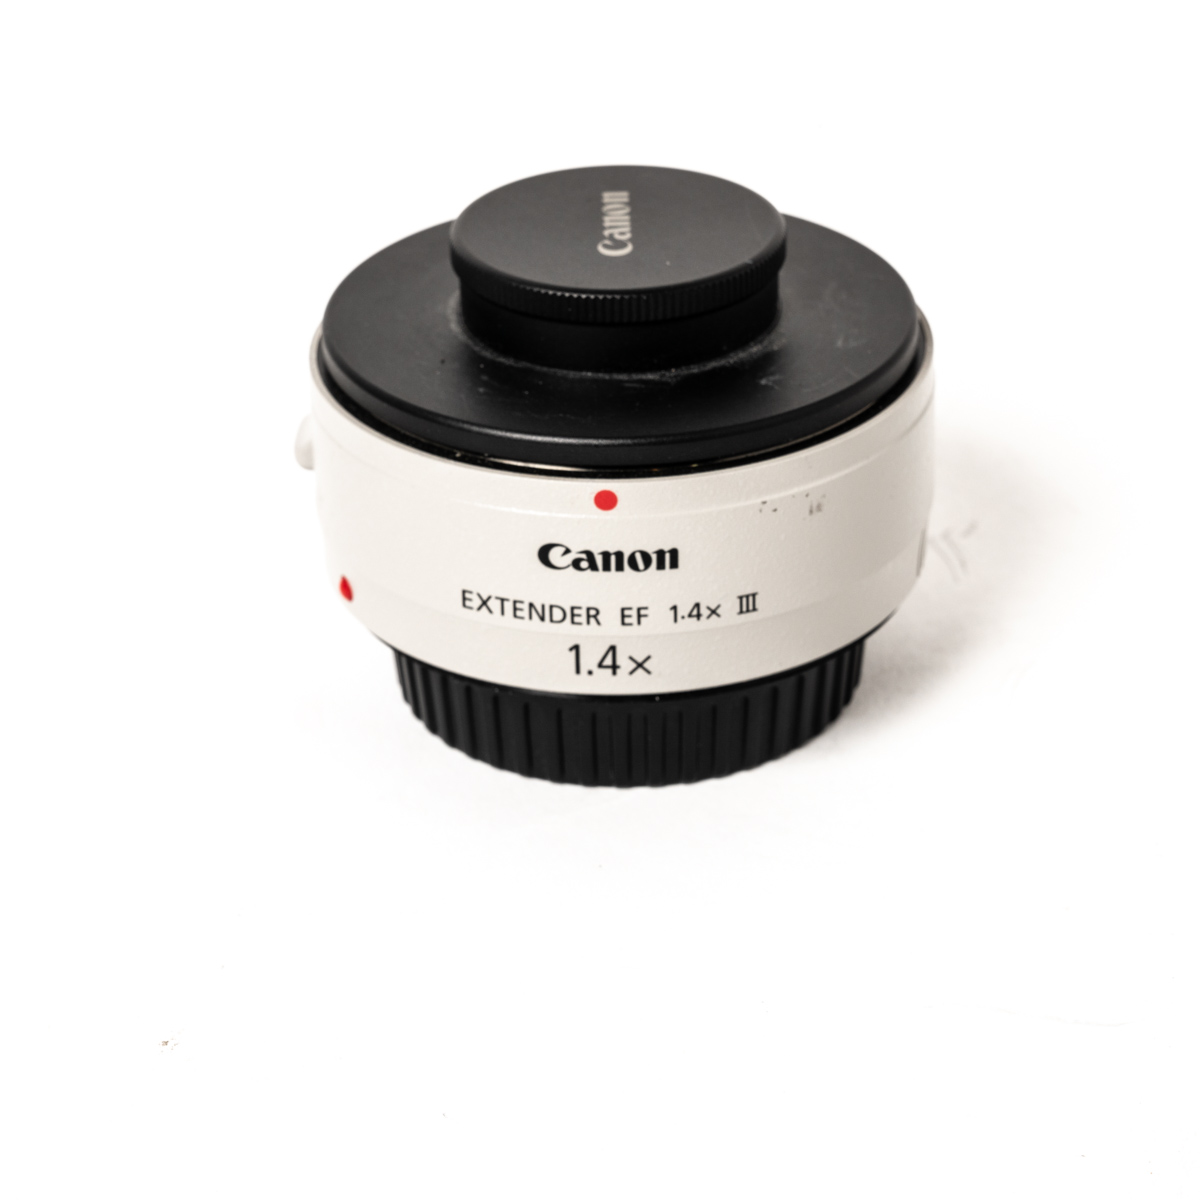 Canon Extender 1.4X III